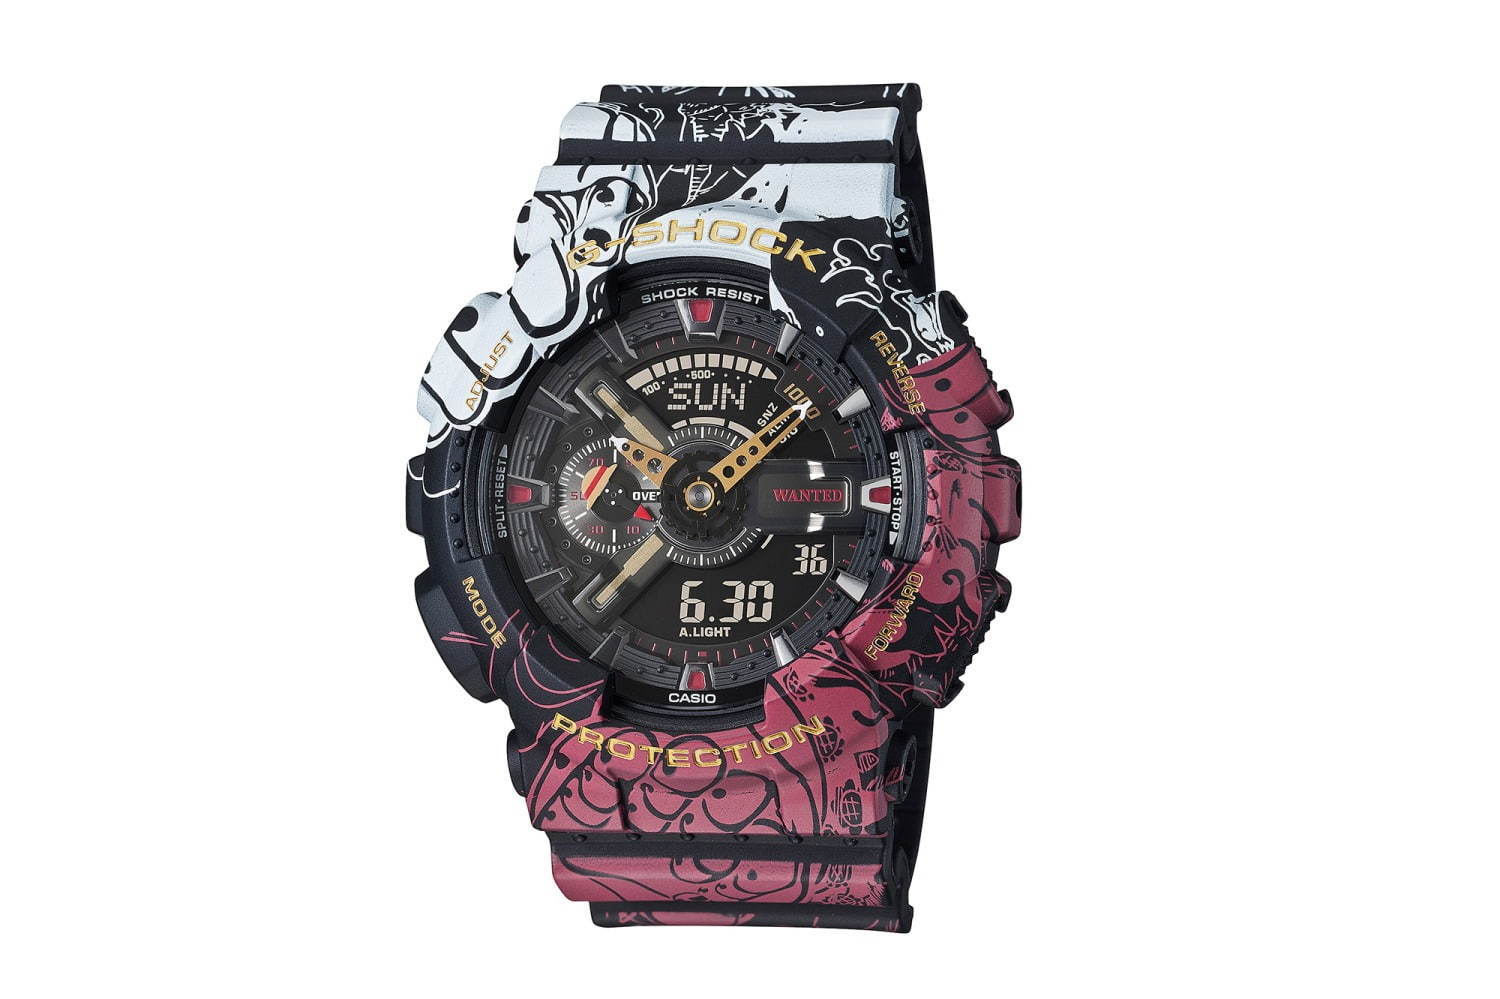 g-shock ドラゴンボール　コラボ　腕時計